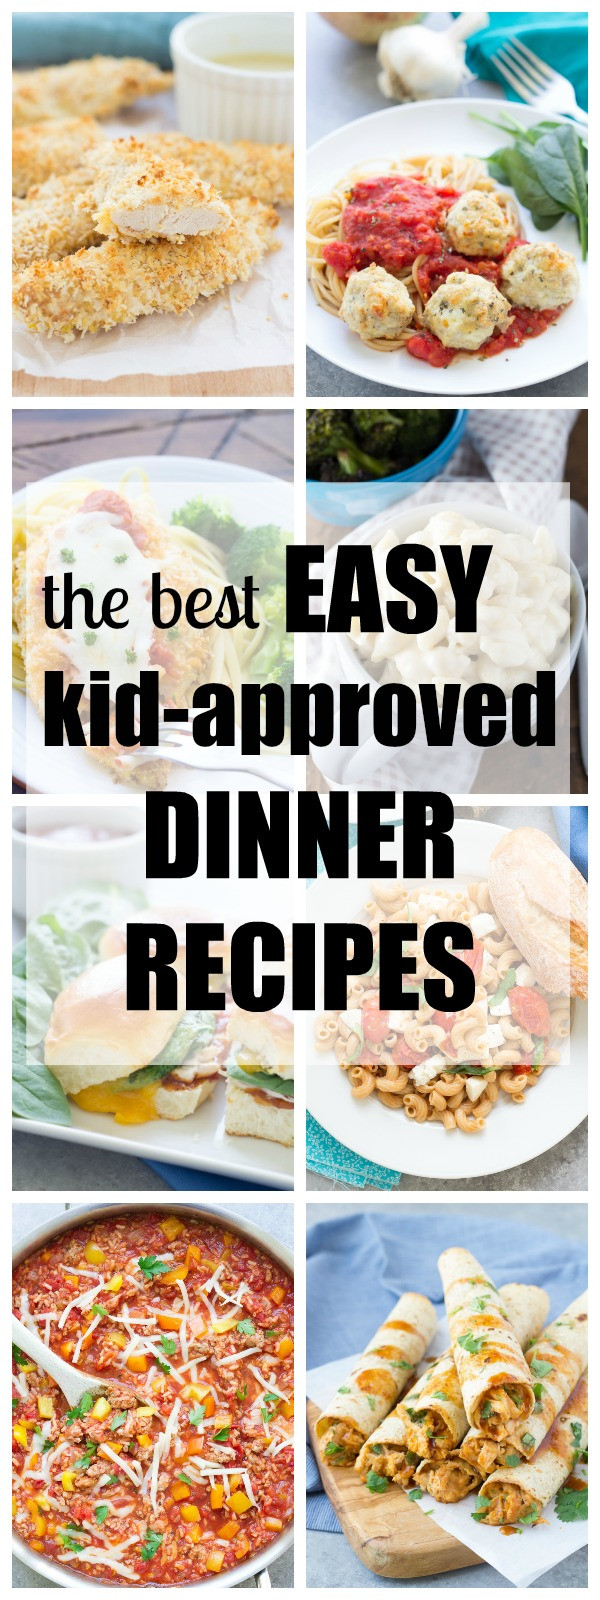 Easy Kid Friendly Dinner Ideas
 Easy Kid Approved Dinner Recipes